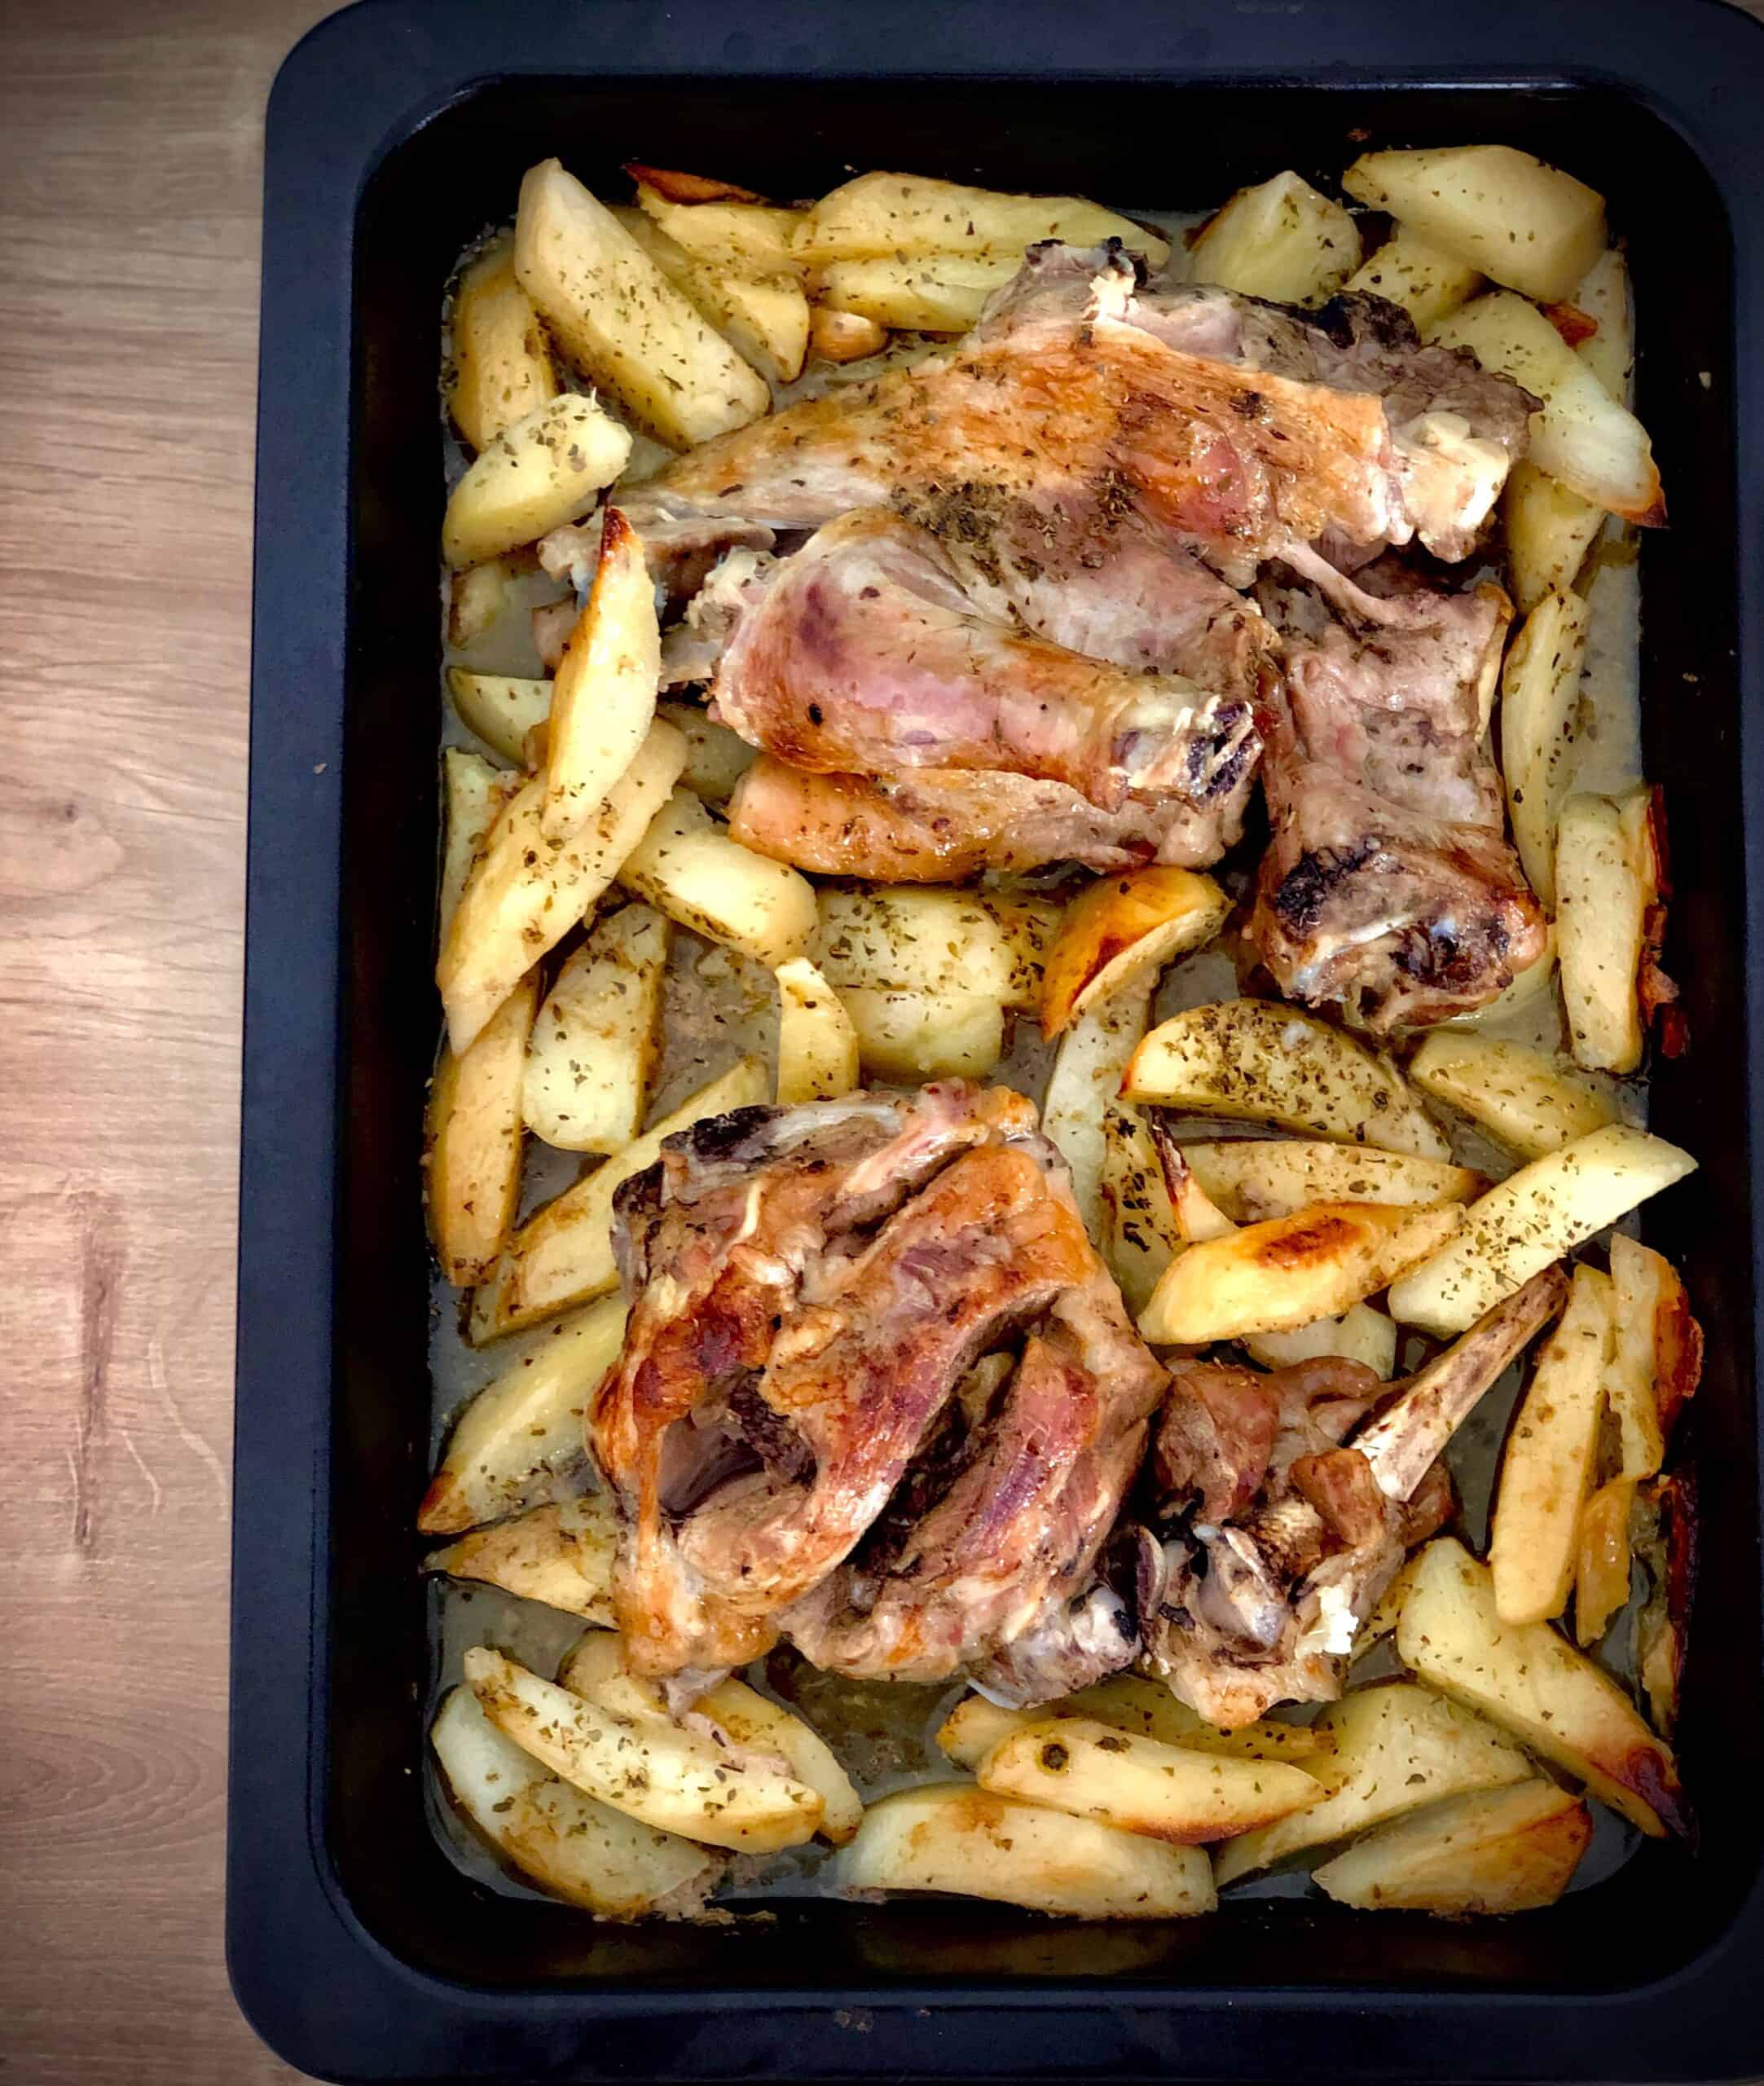 https://www.mygreekdish.com/wp-content/uploads/2013/08/Greek-roast-leg-of-lamb-with-honey-recipe-scaled.jpeg